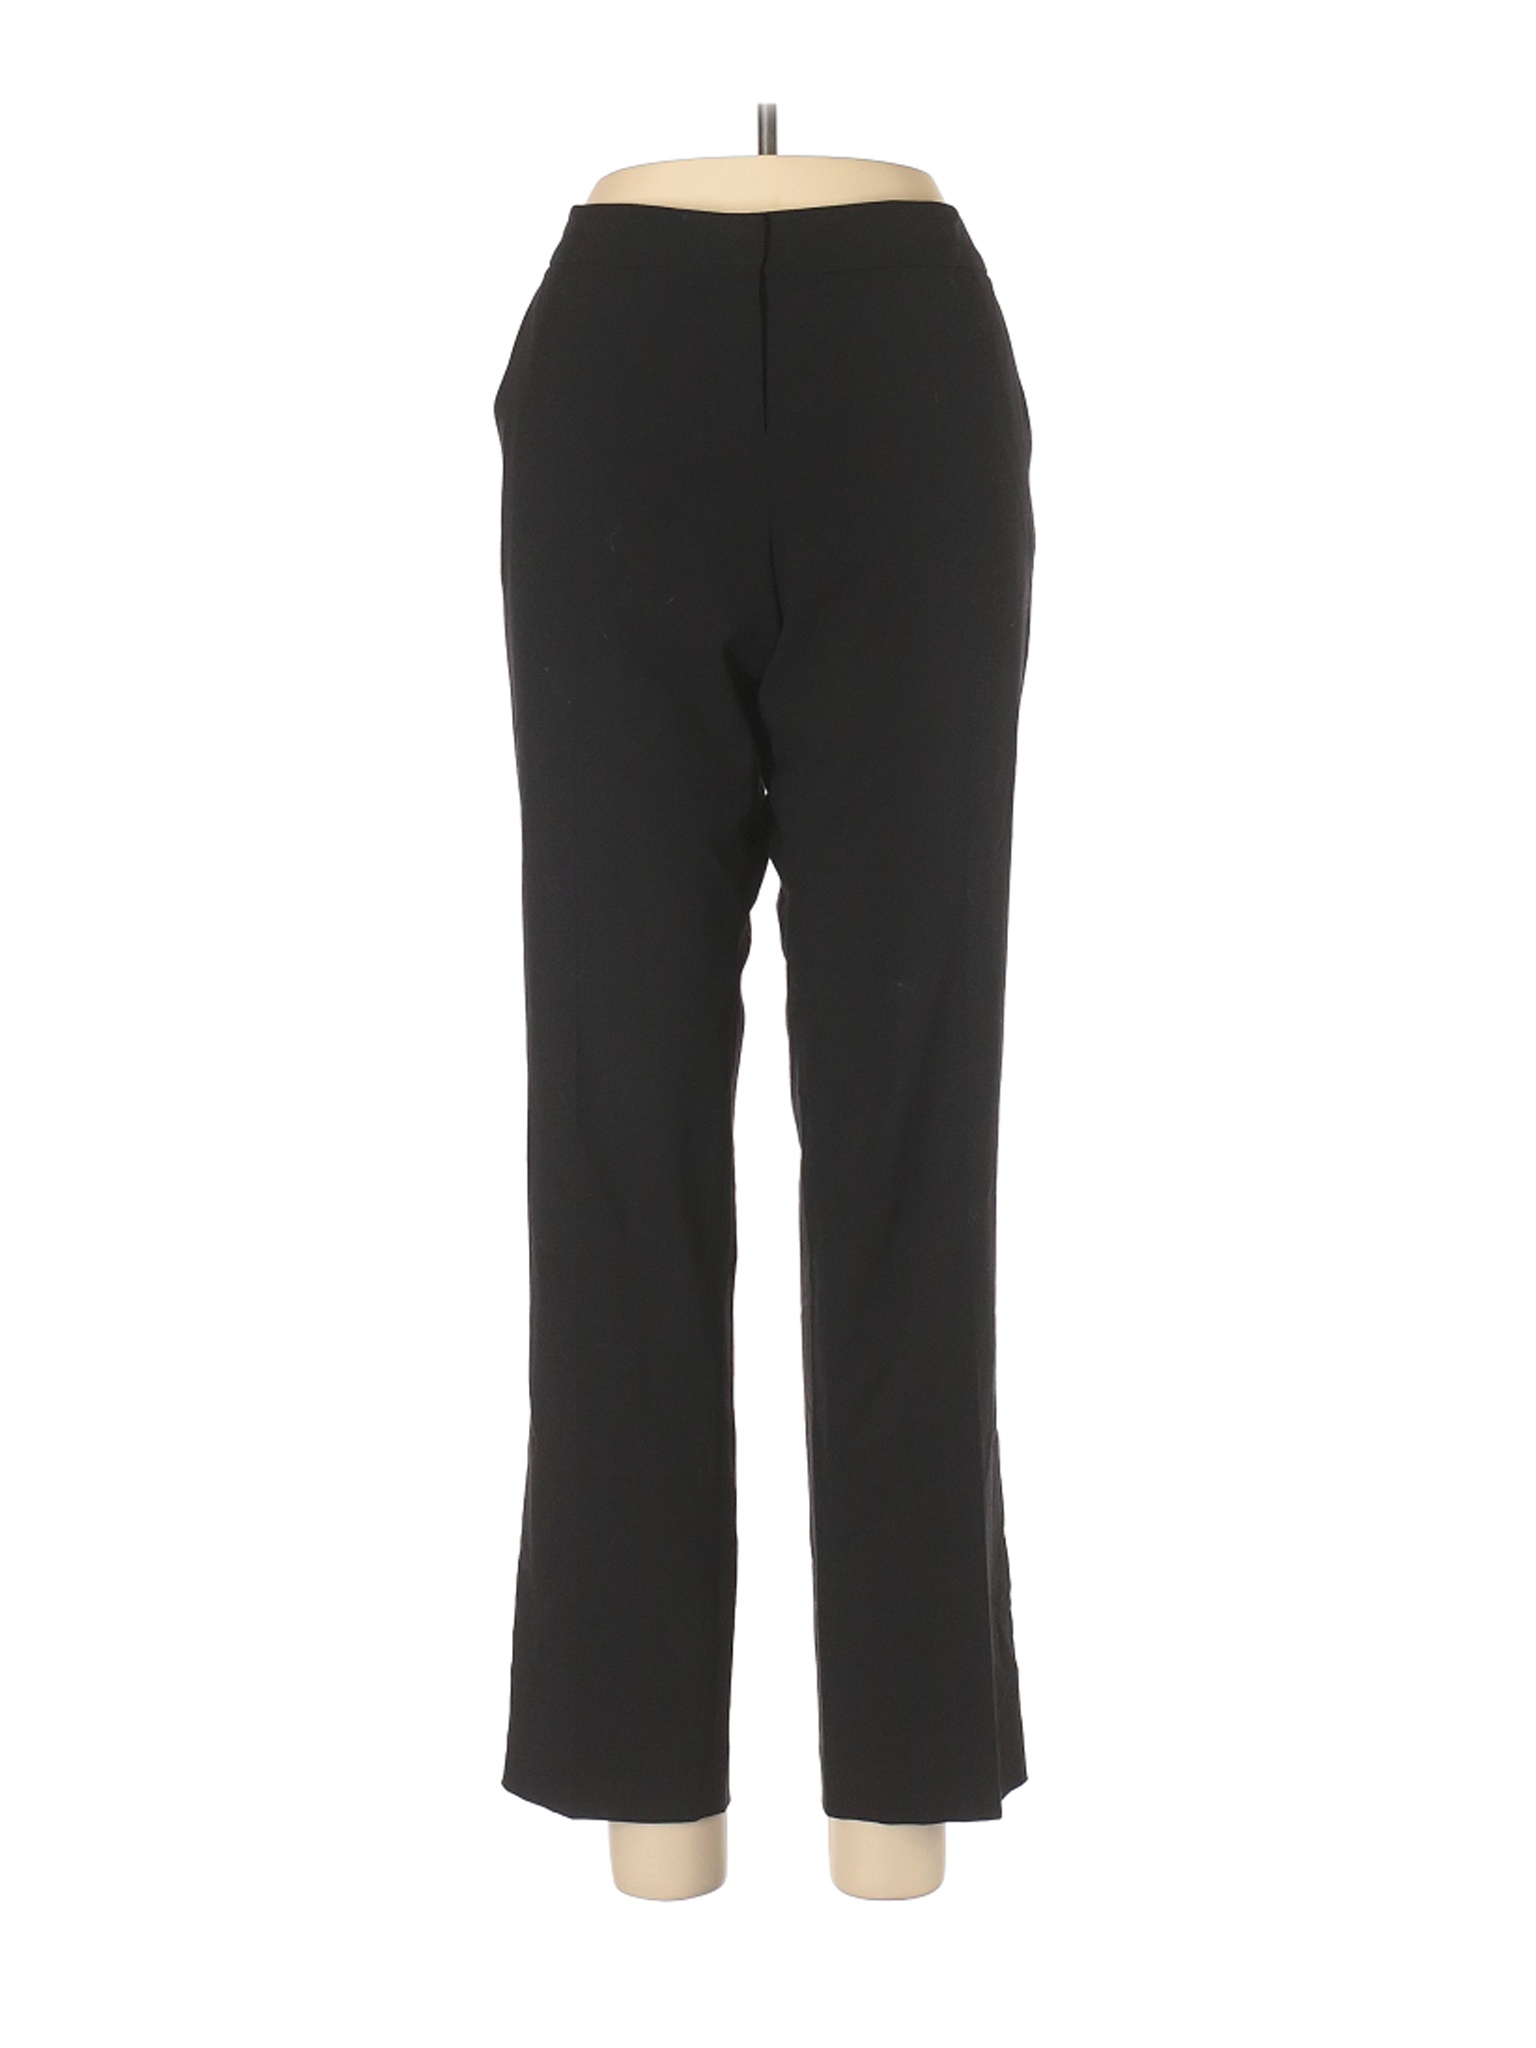 Vince Camuto Women Black Dress Pants 10 | eBay